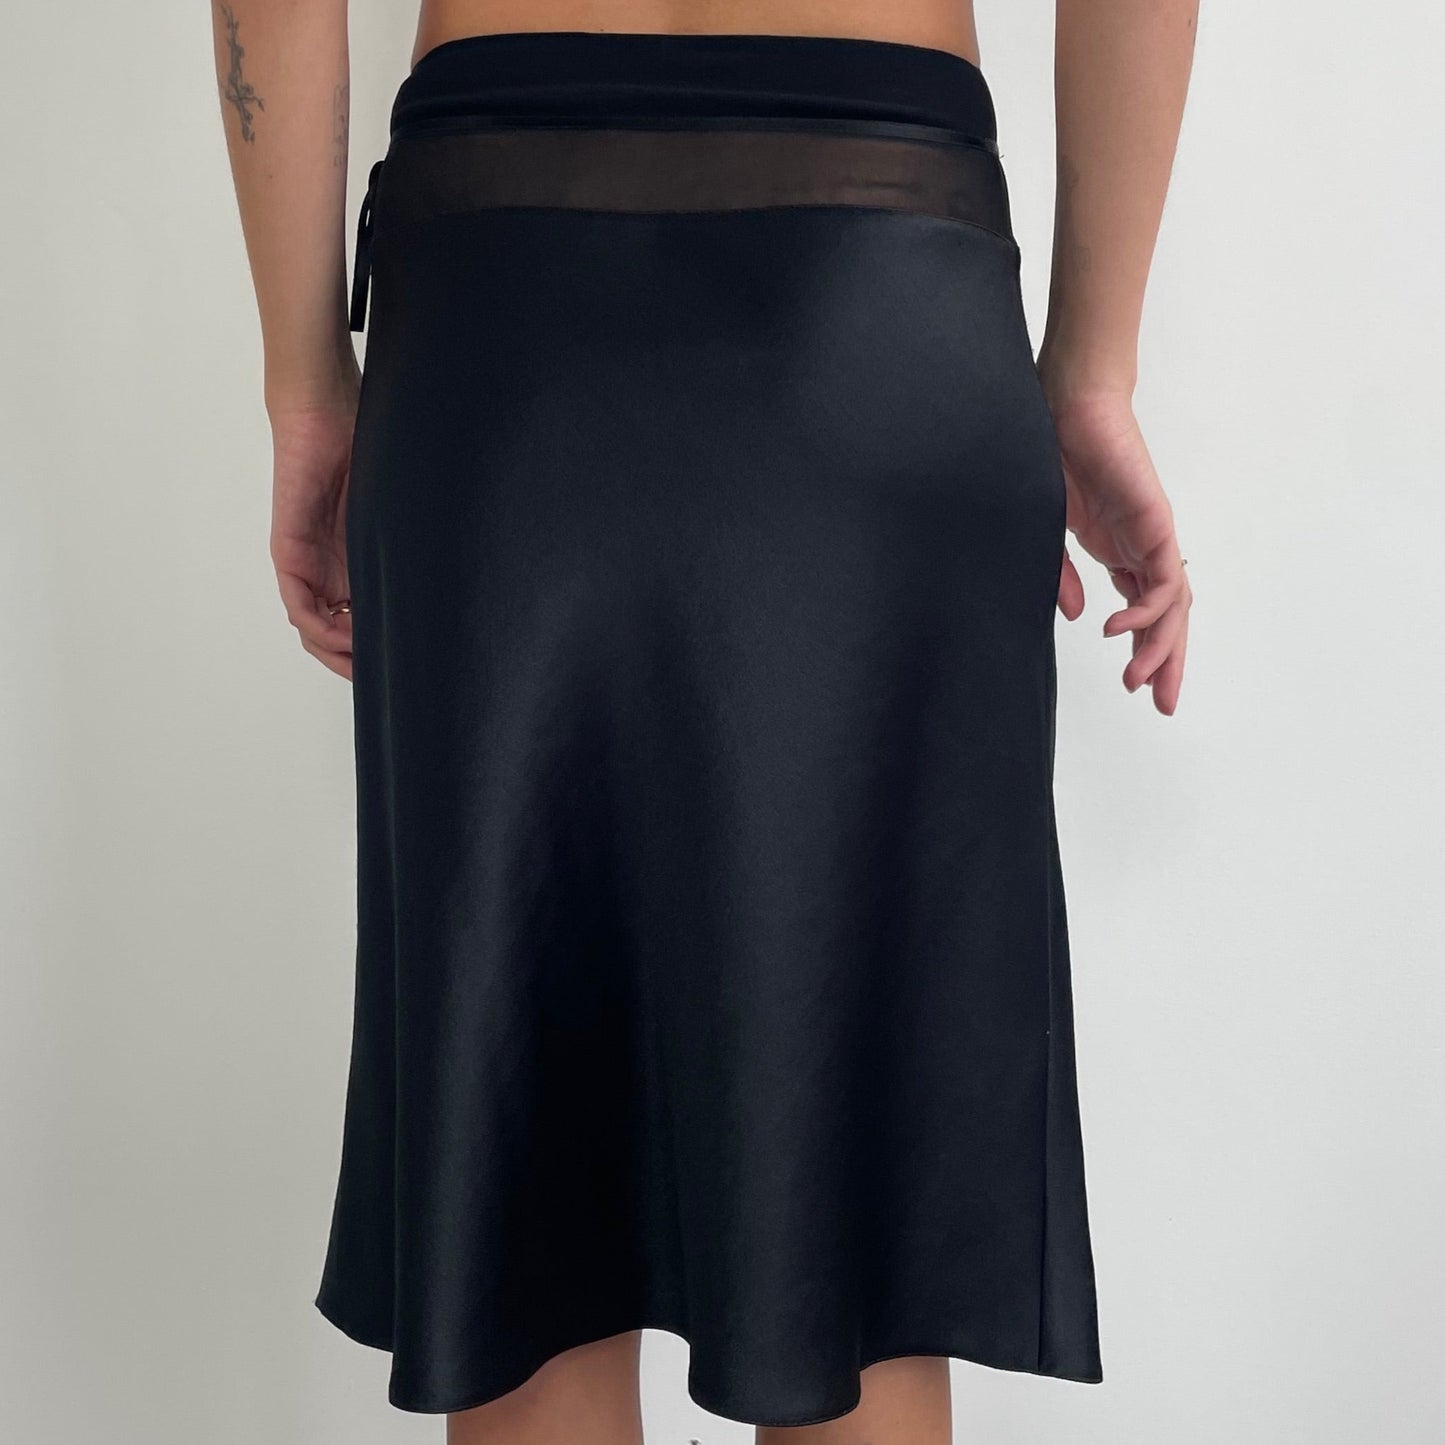 anna molinari black skirt